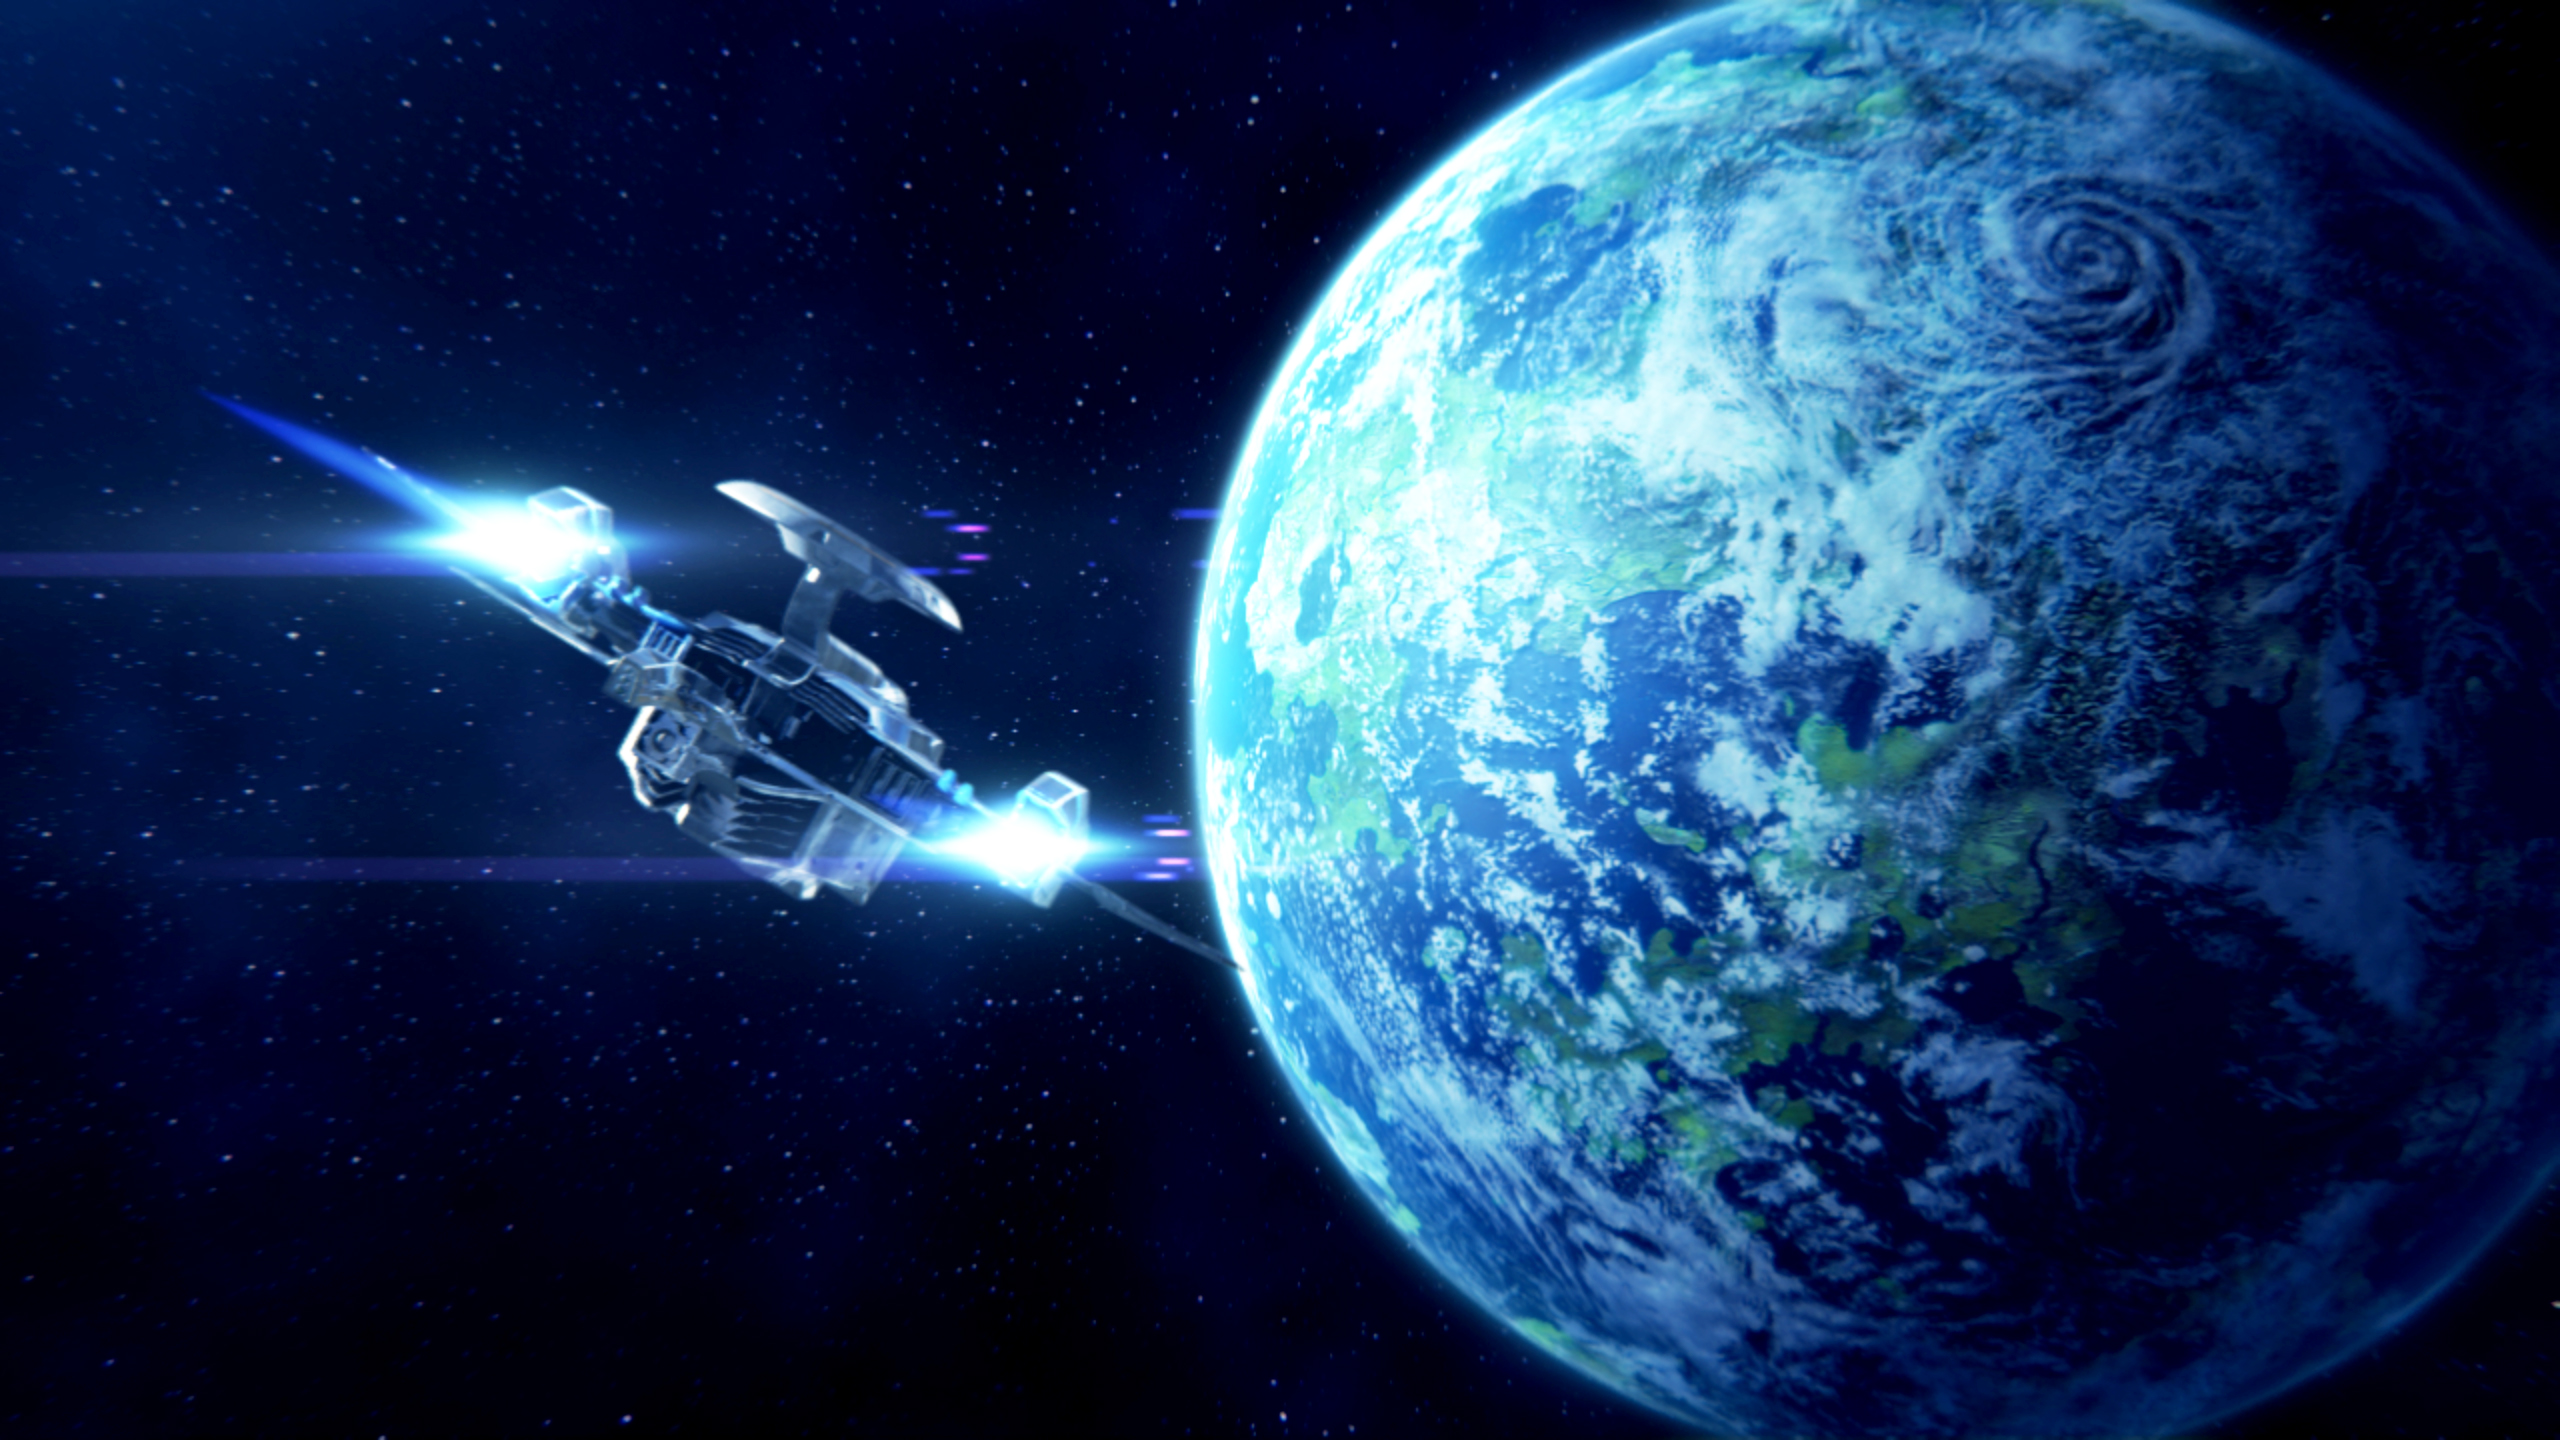 Phantasy Star Online 2: Closed Beta Test Starts February 7th